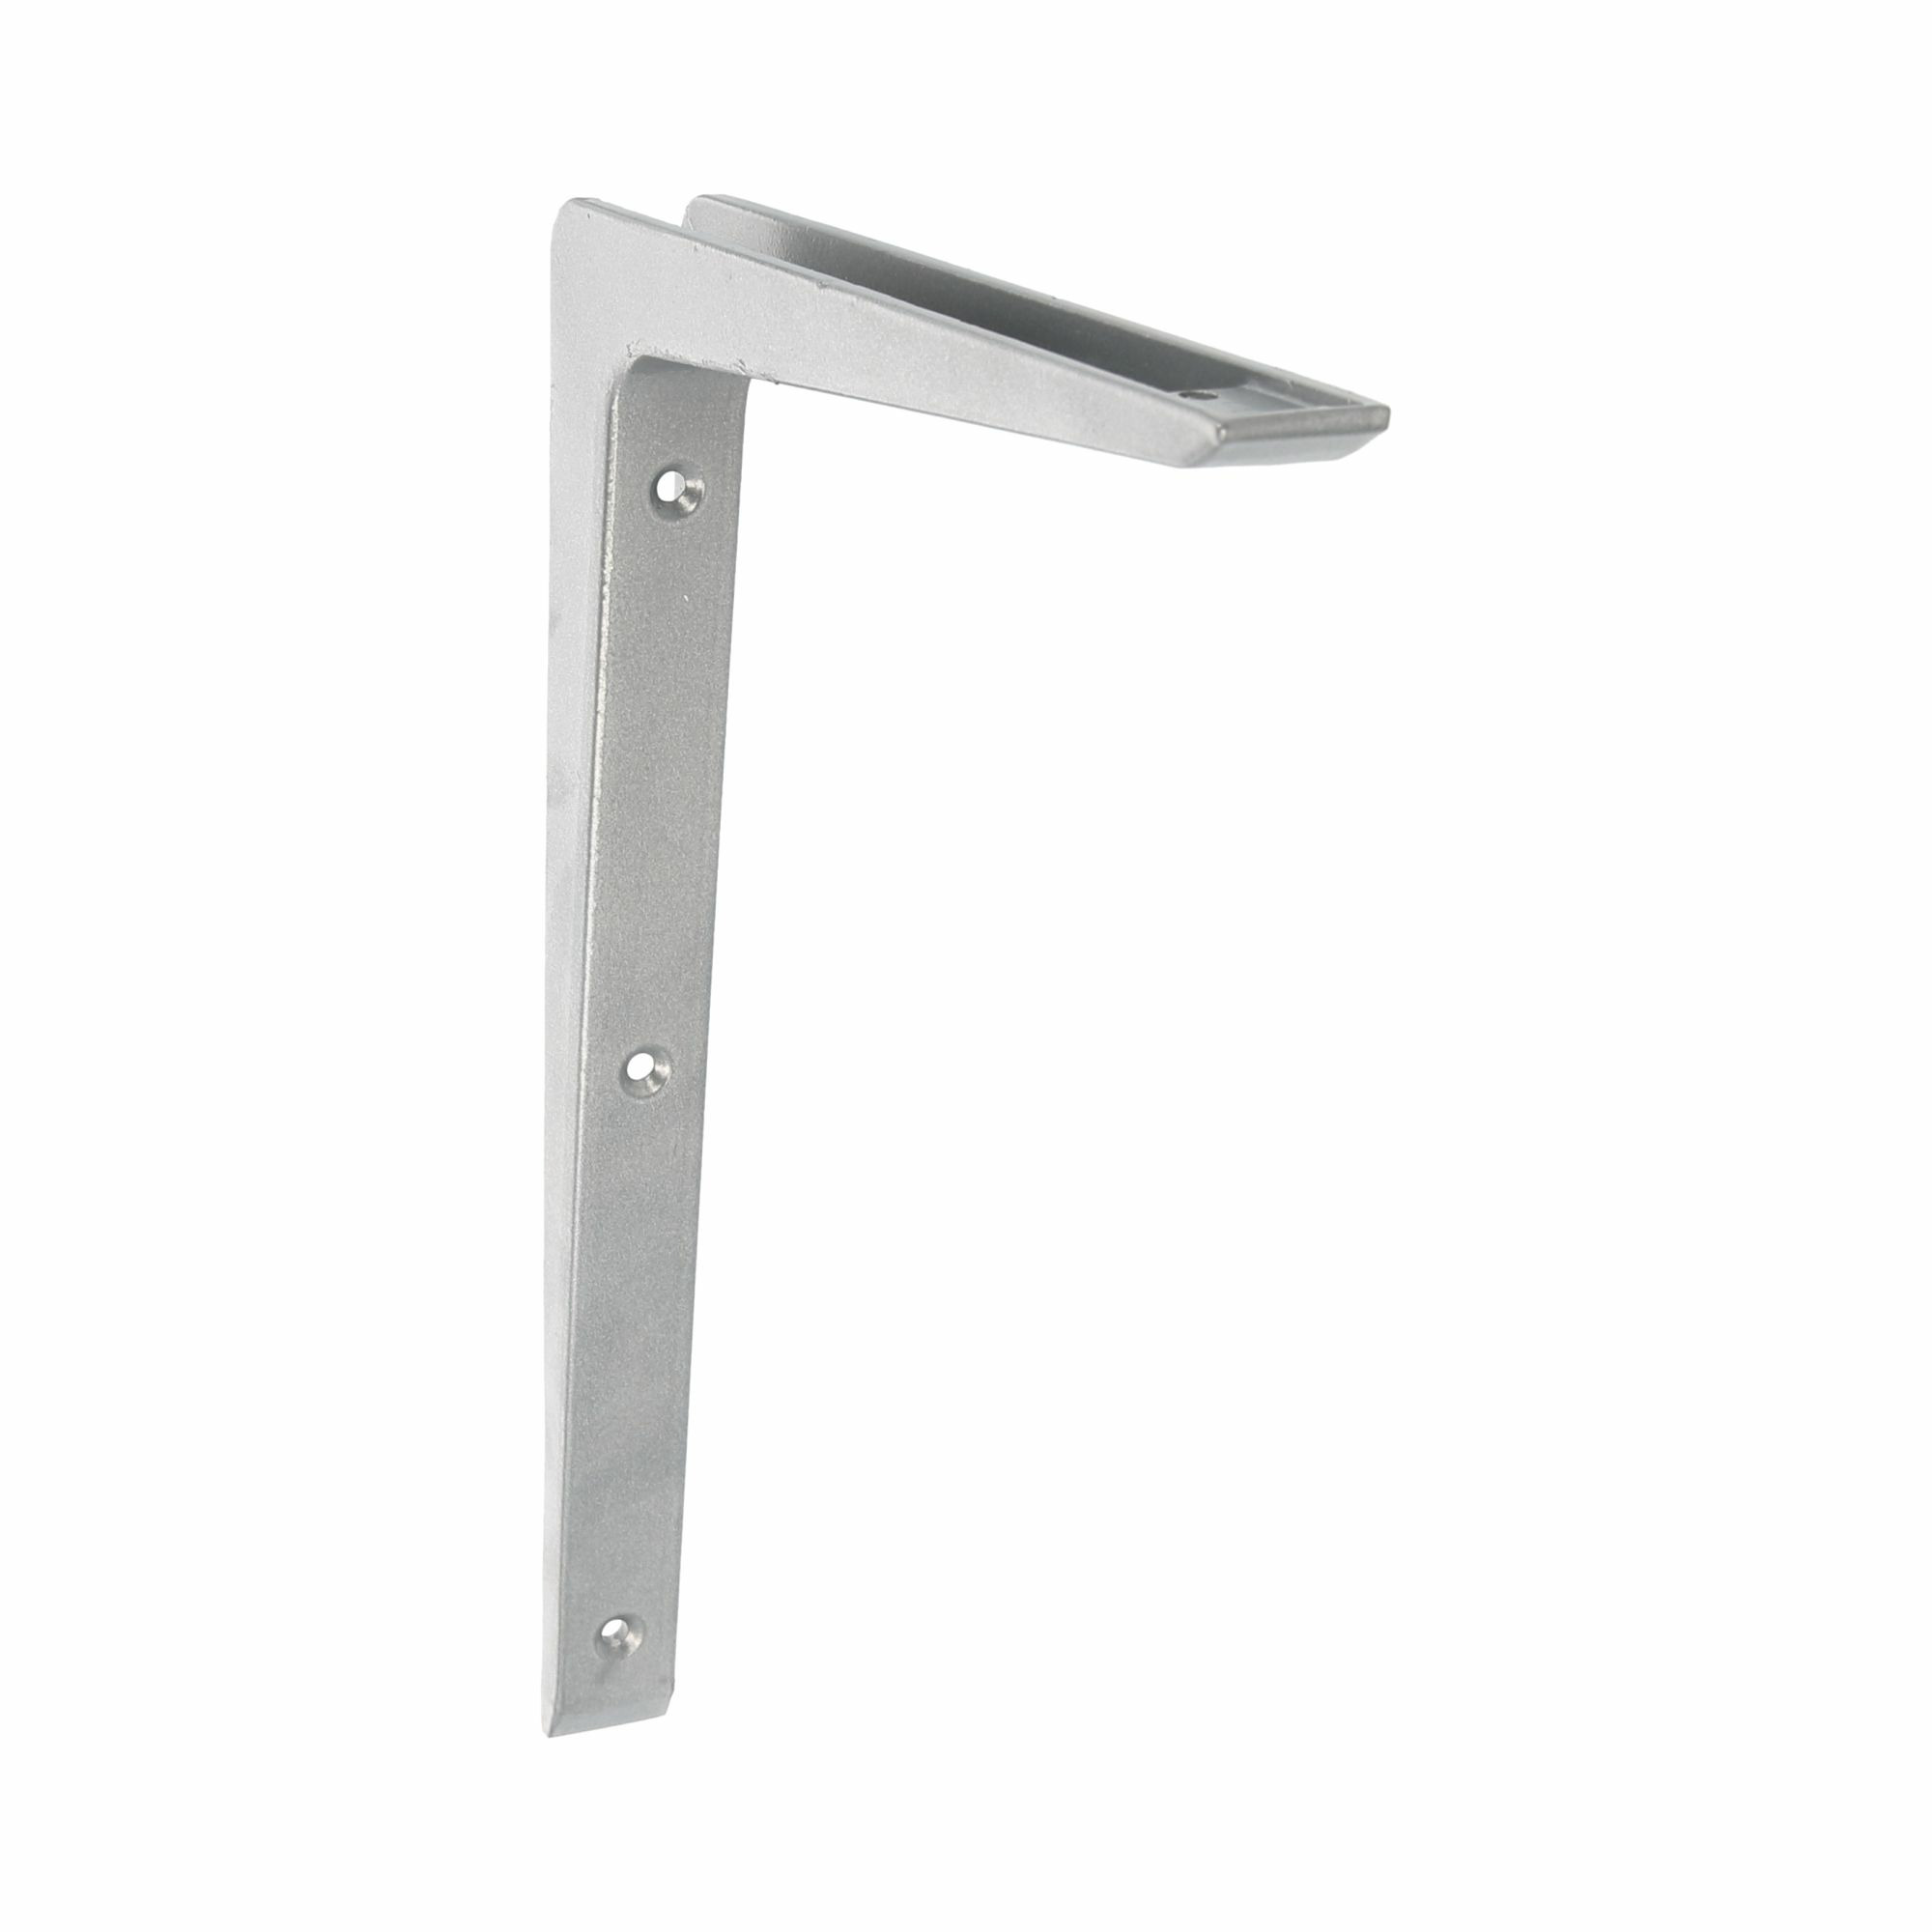 AMIG Plankdrager/planksteun van aluminium - gelakt zilvergrijs - H300 x B200 mm -